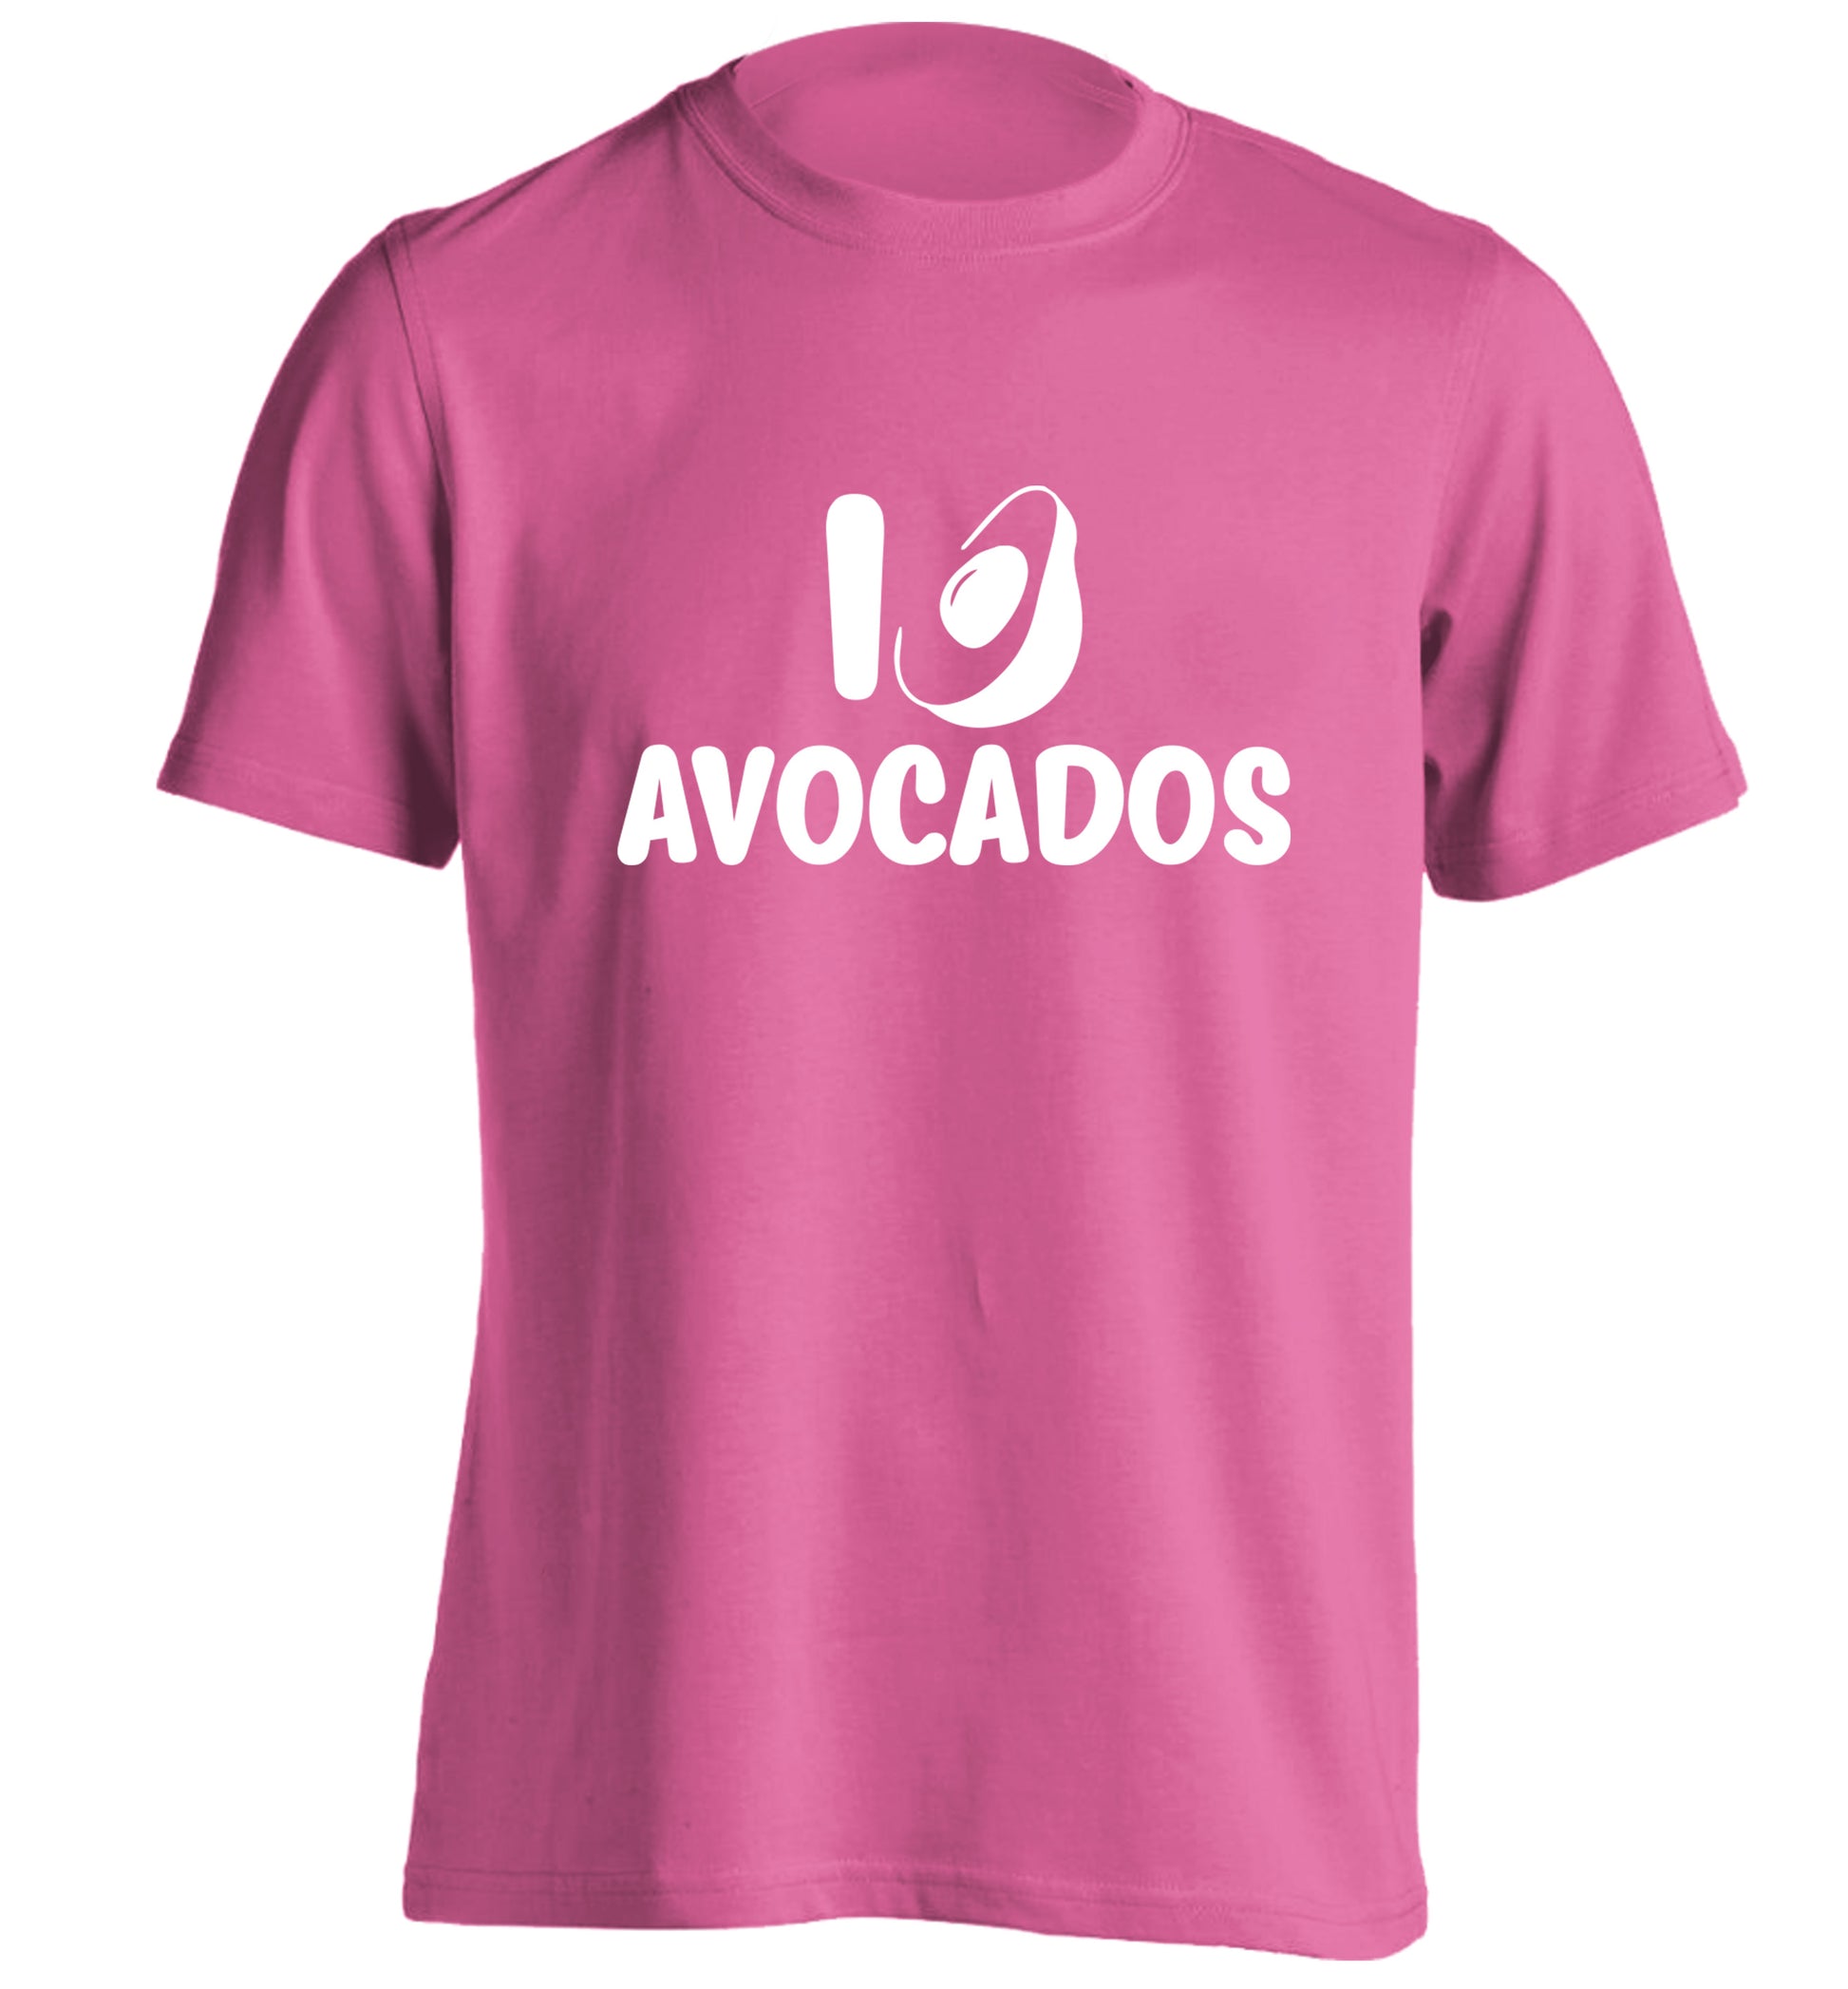 I love avocados adults unisex pink Tshirt 2XL